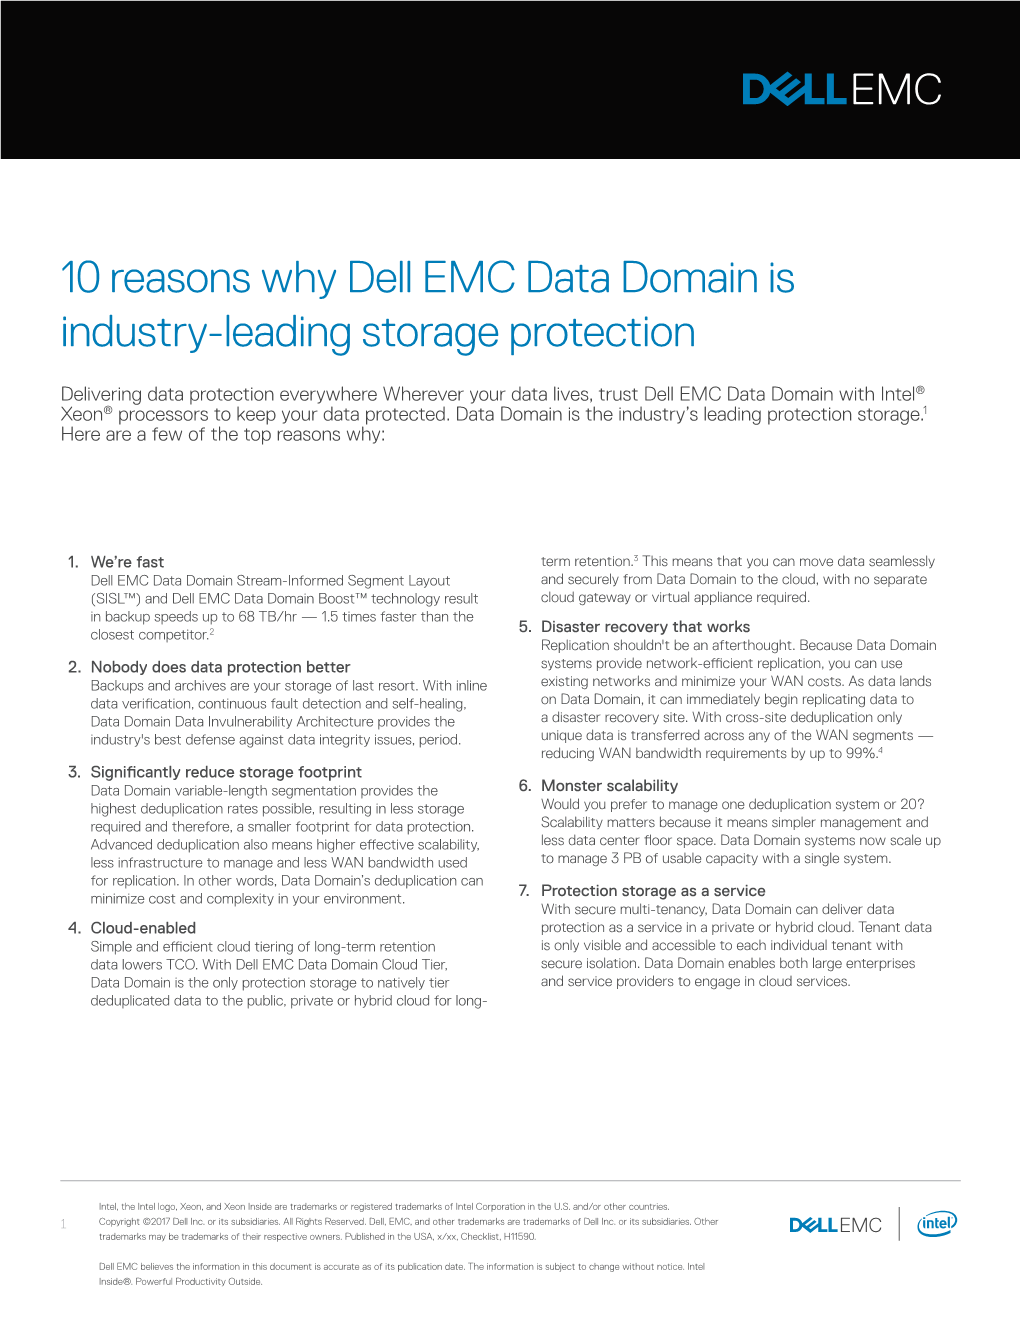 Top Reasons Why Dell EMC Data Domain